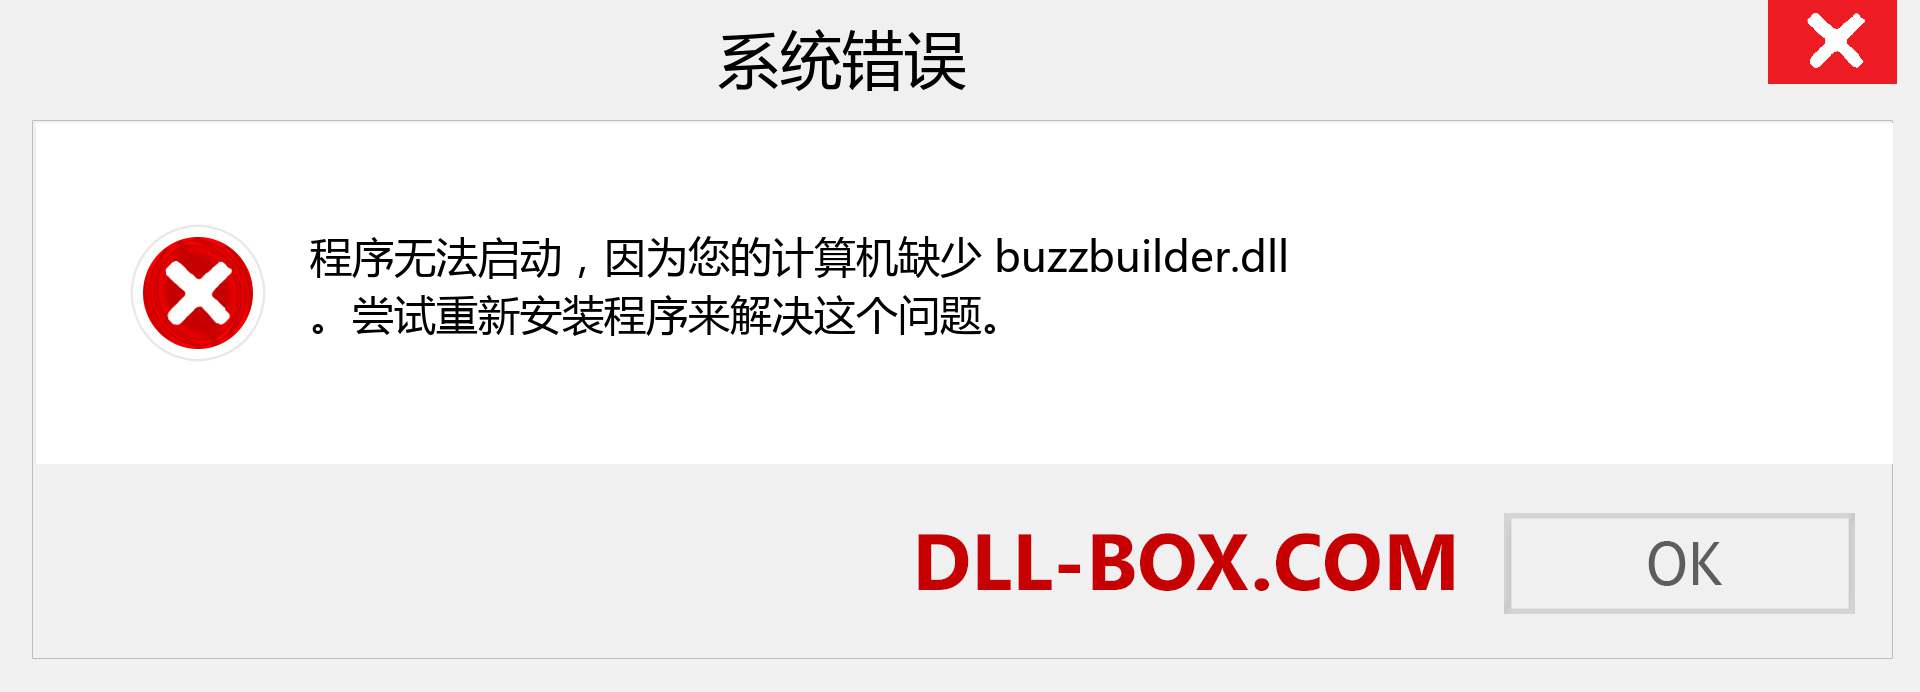 buzzbuilder.dll 文件丢失？。 适用于 Windows 7、8、10 的下载 - 修复 Windows、照片、图像上的 buzzbuilder dll 丢失错误